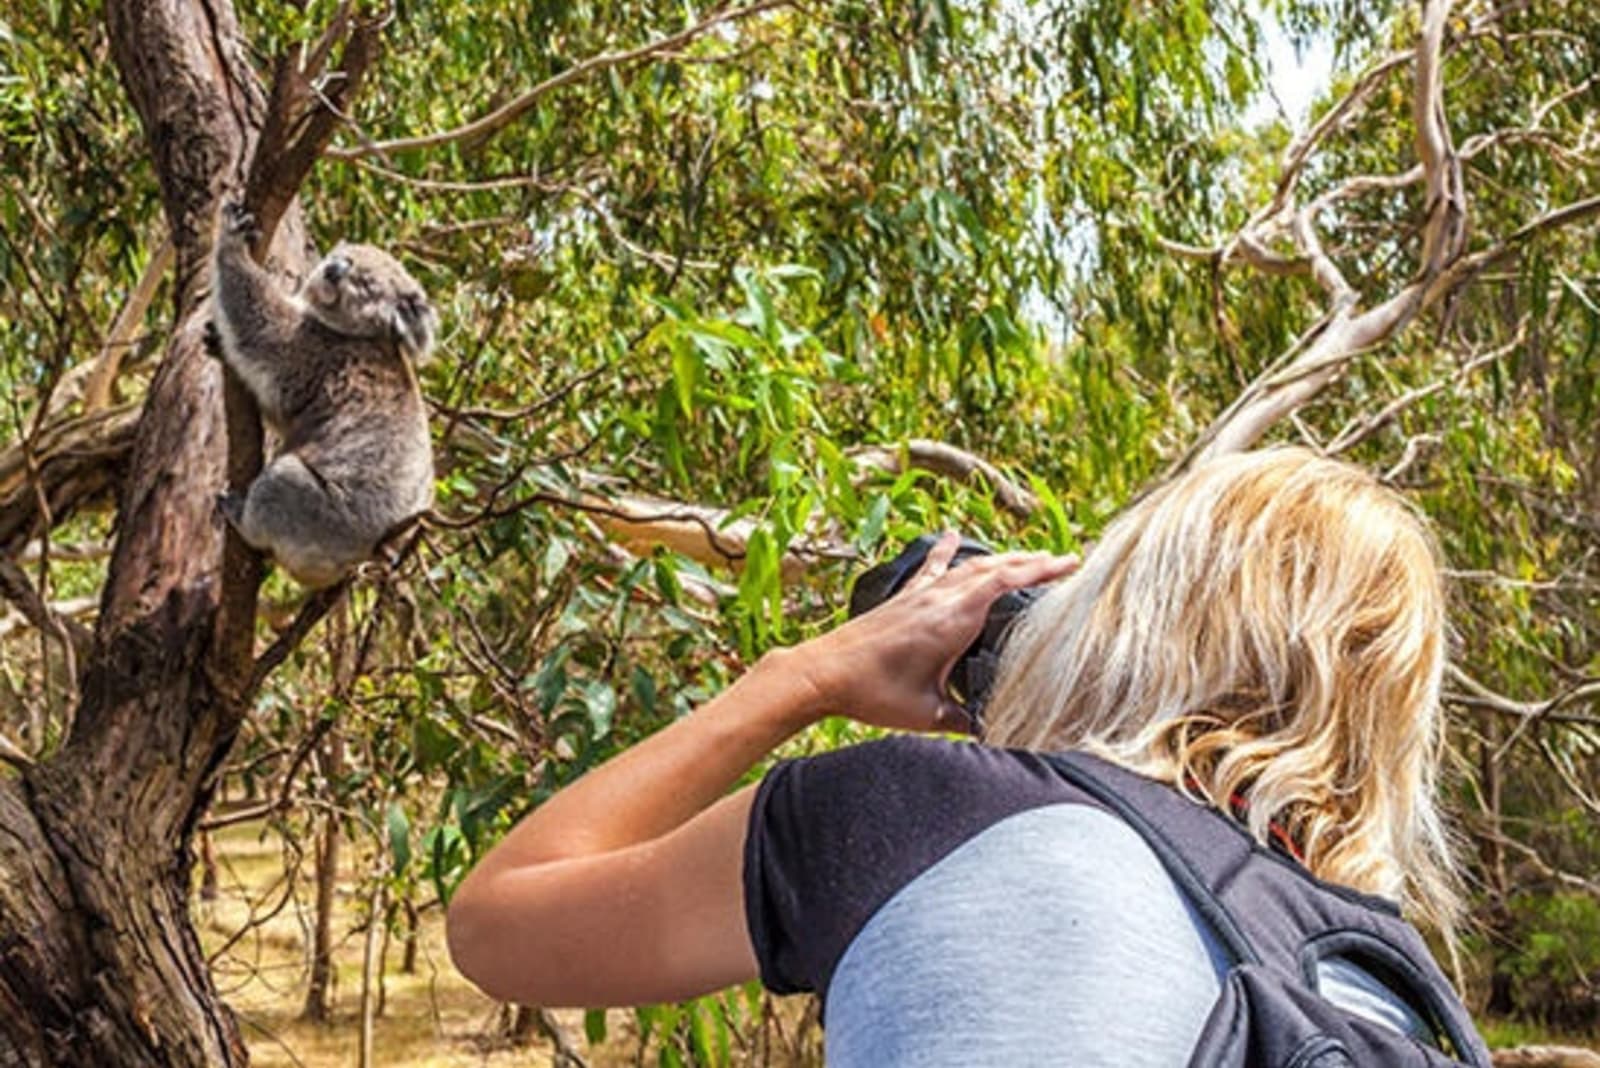 RS-Photographing-a-koala-Australia-shutterstock_354968972.jpg